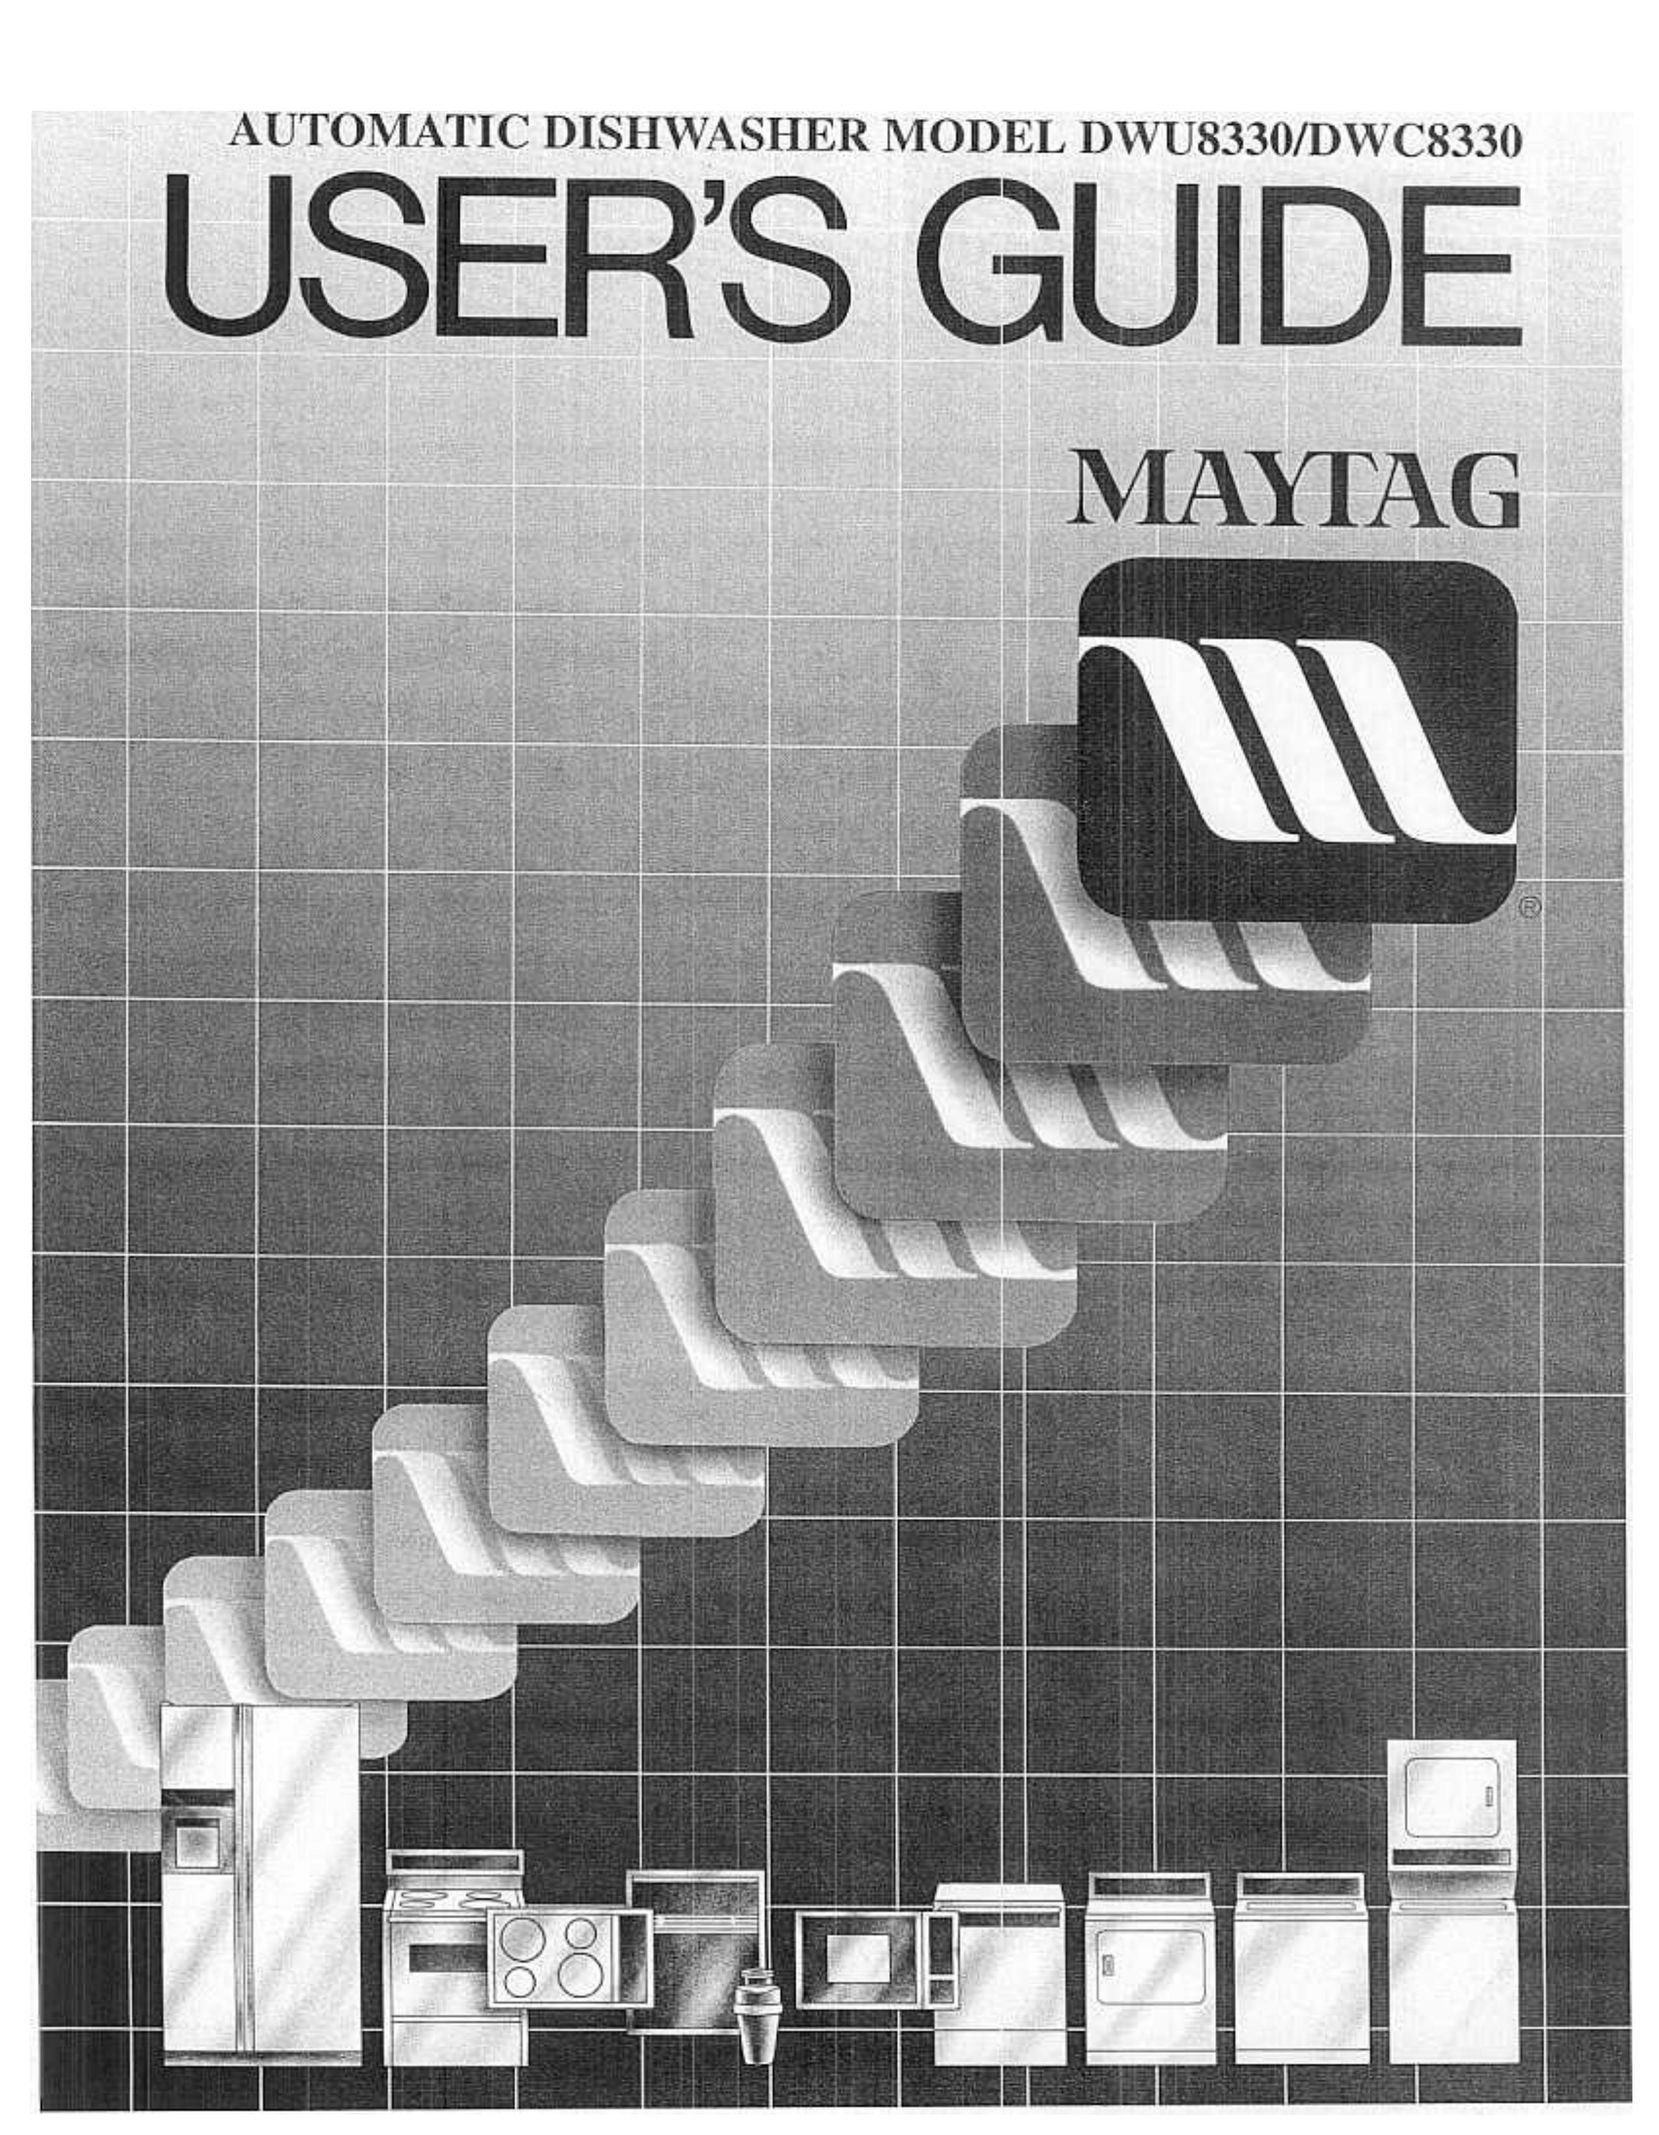 Maytag DWU8330 Dishwasher User Manual